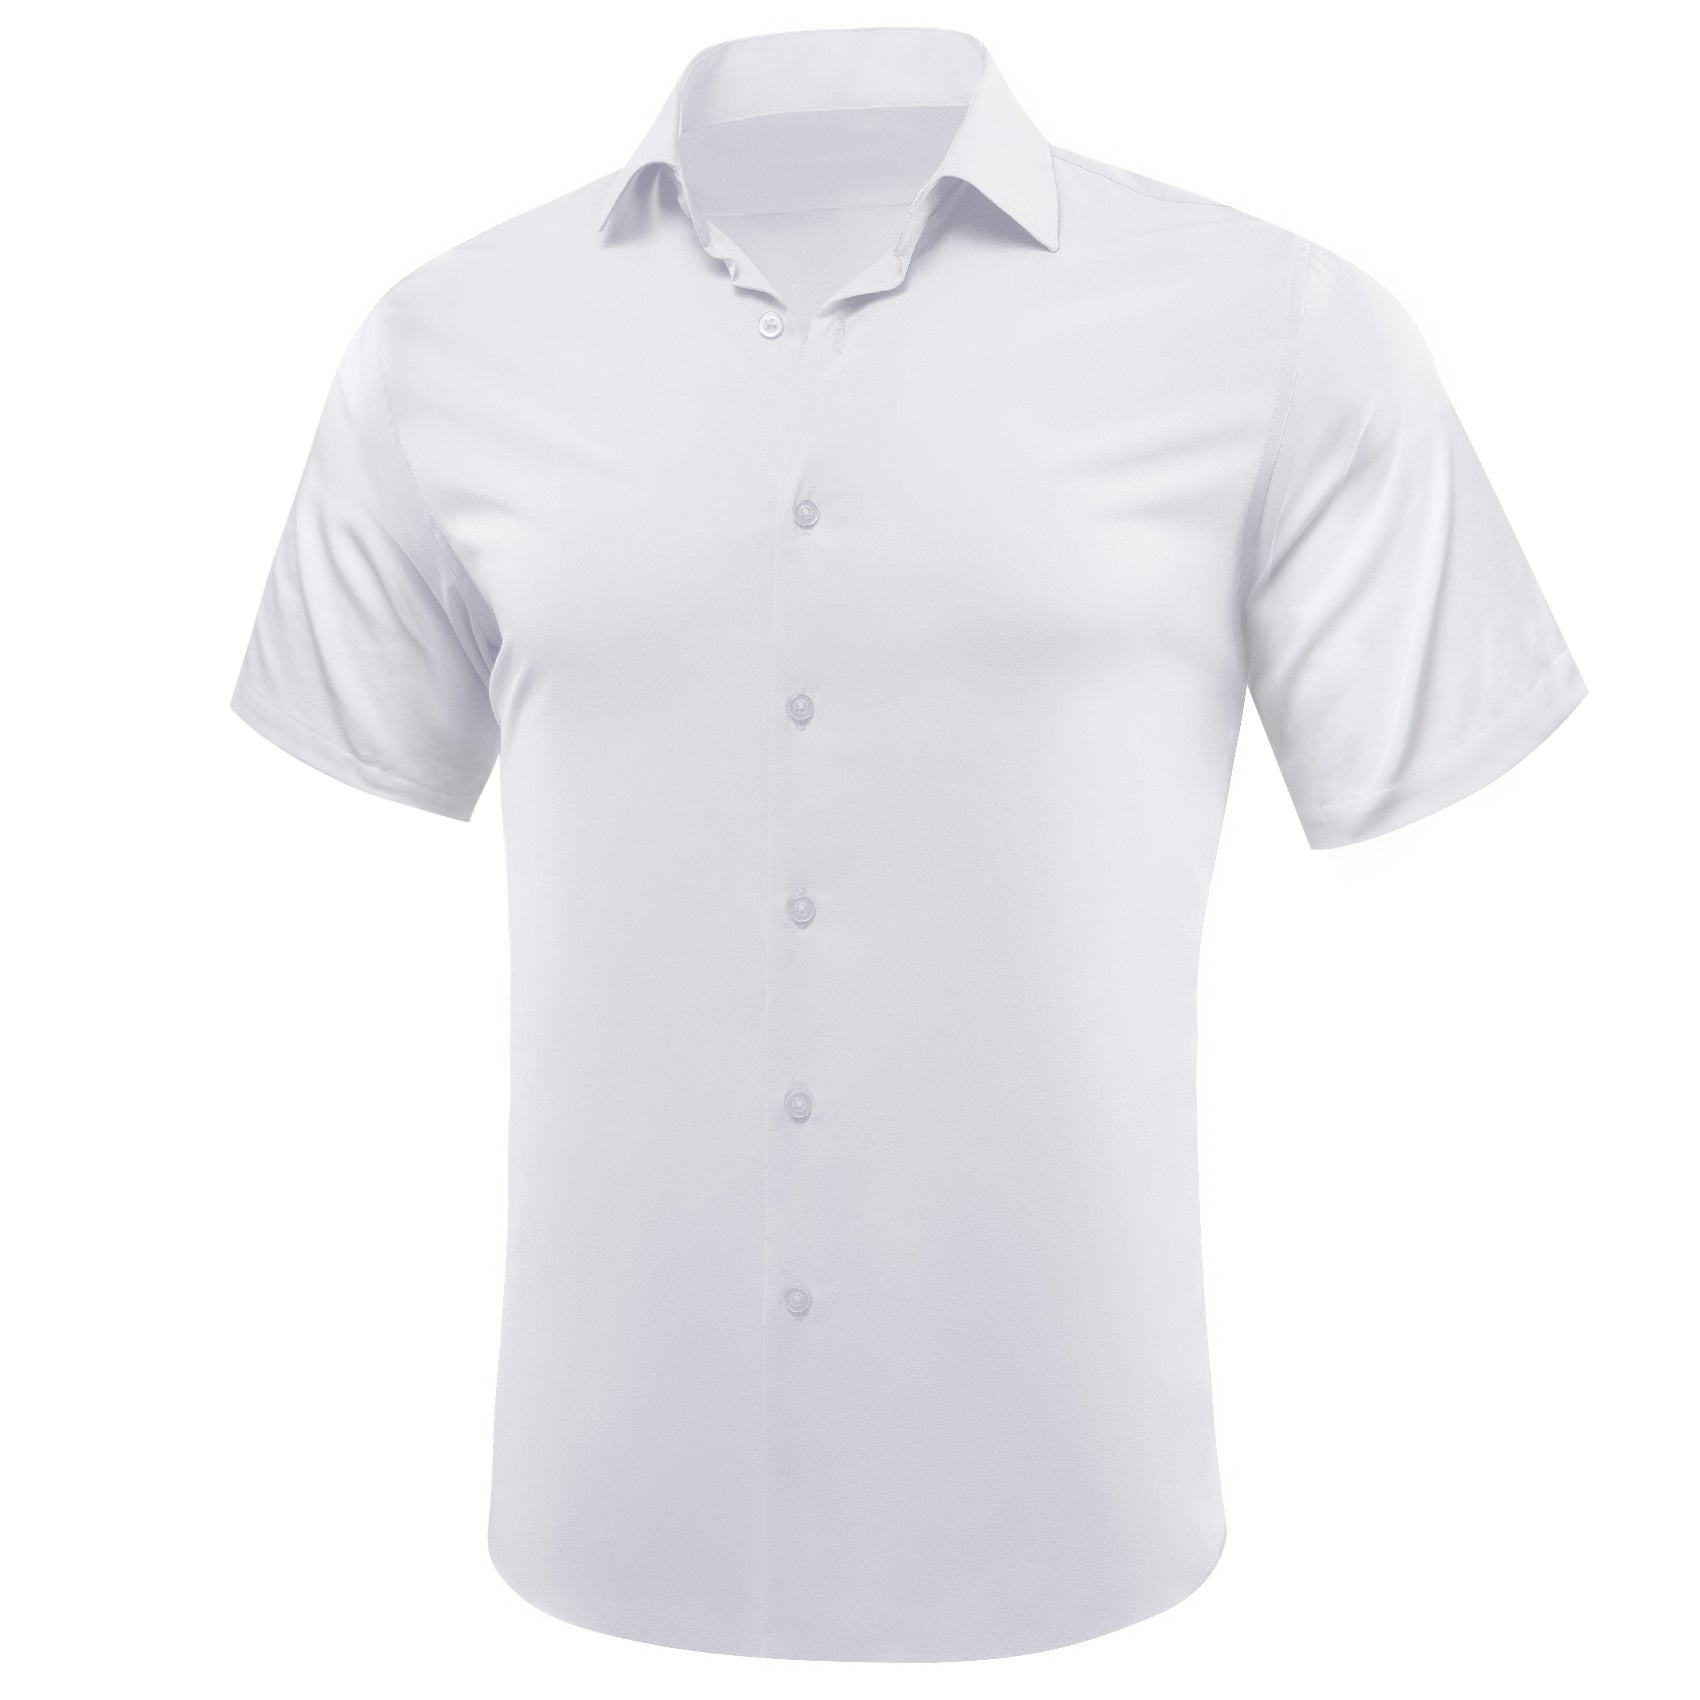 white long sleeve shirt